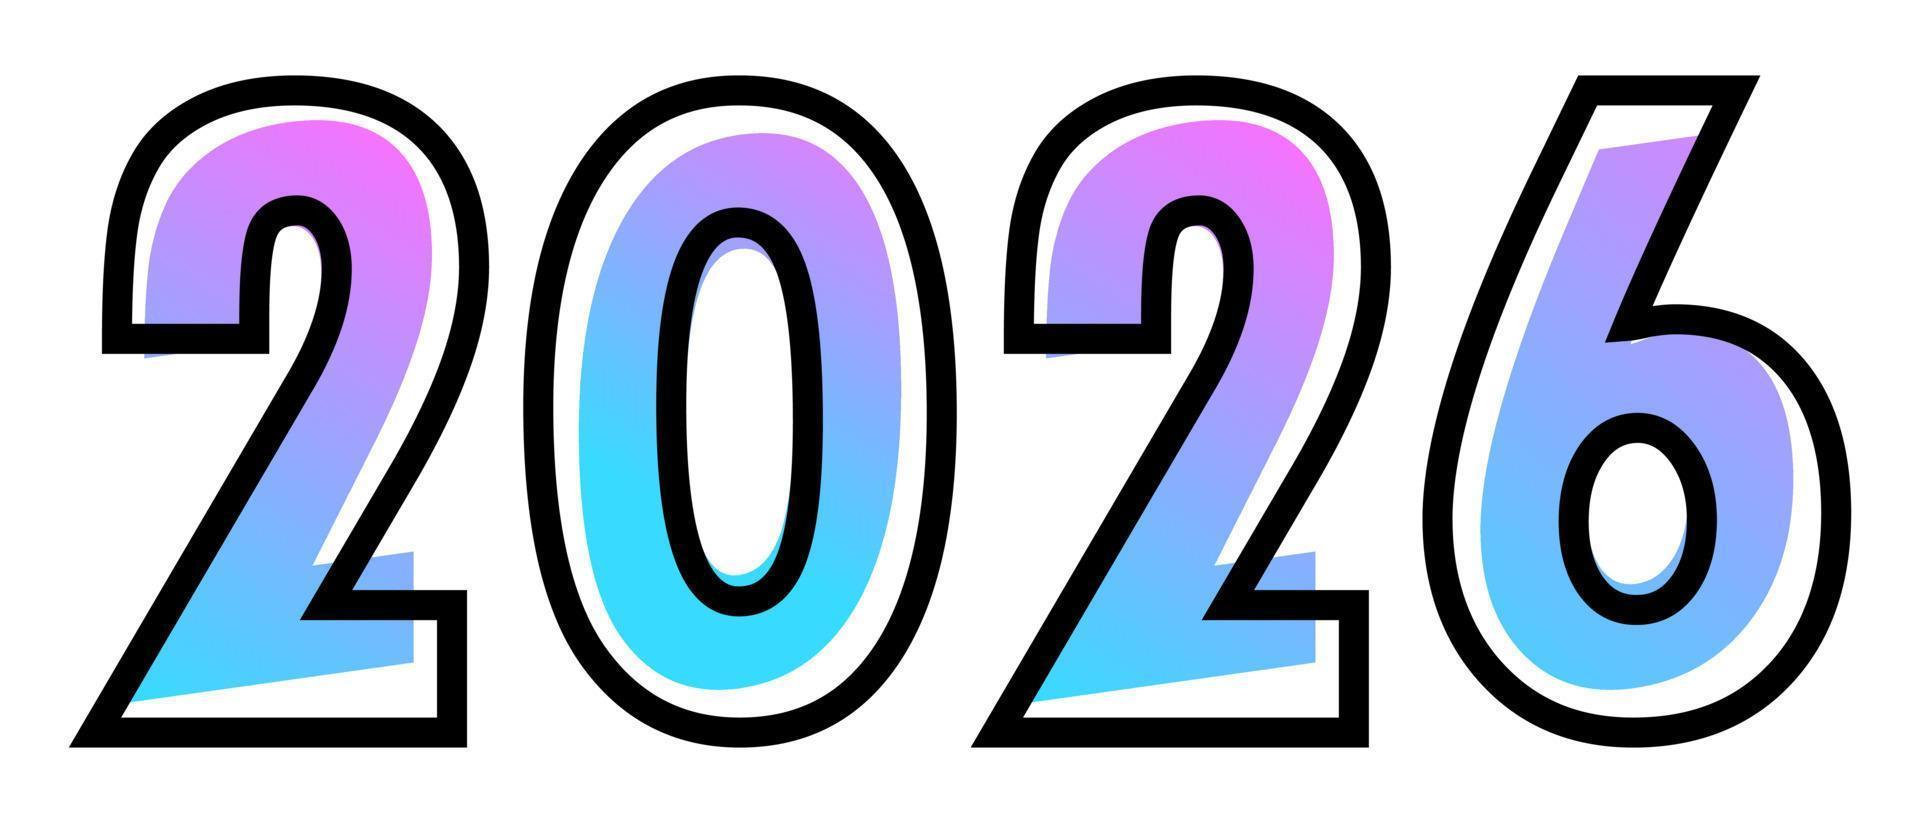 texto de design de ano novo 2026 com cor gradiente azul-roxo e contorno preto vetor